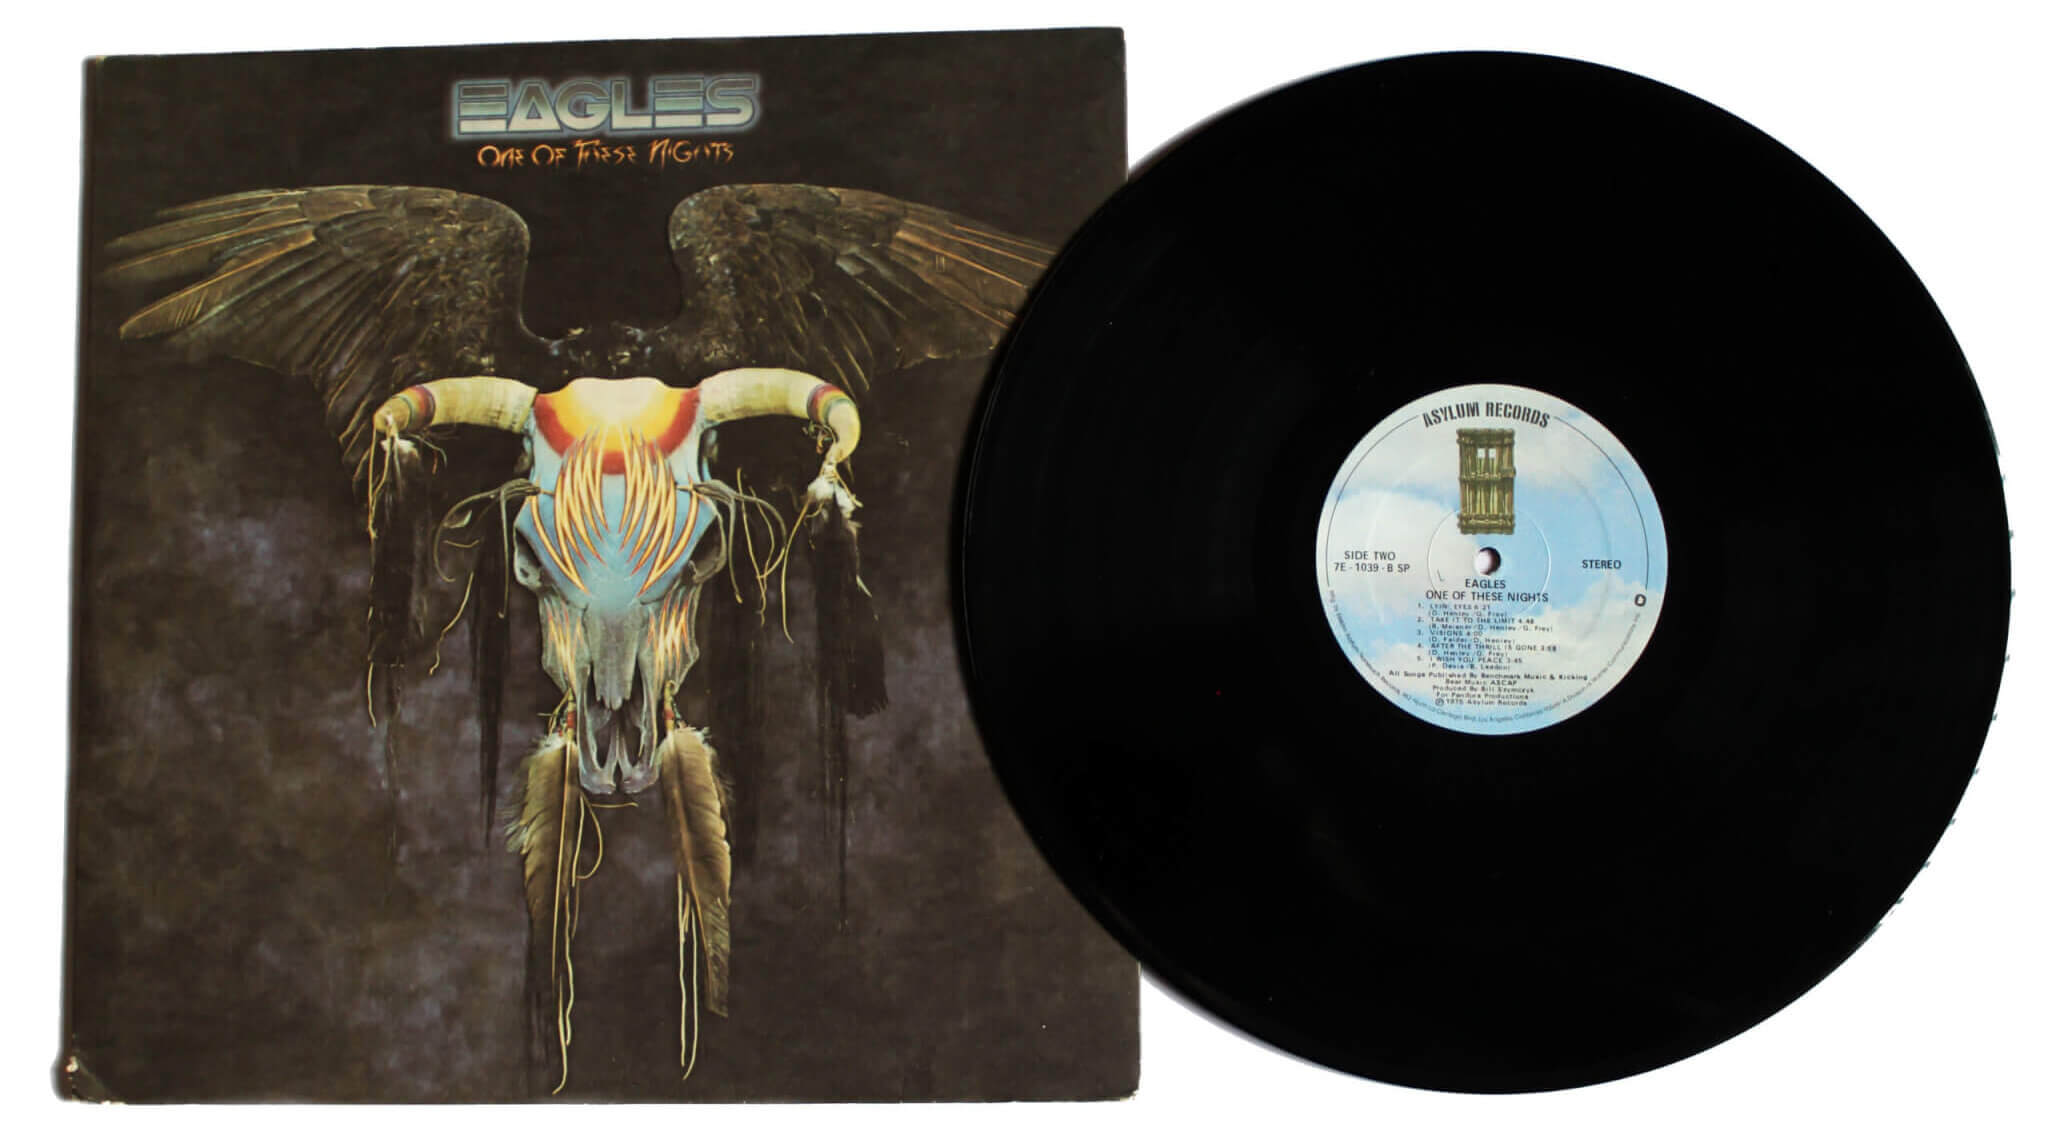 Eagles - Desperado Lyrics and Tracklist